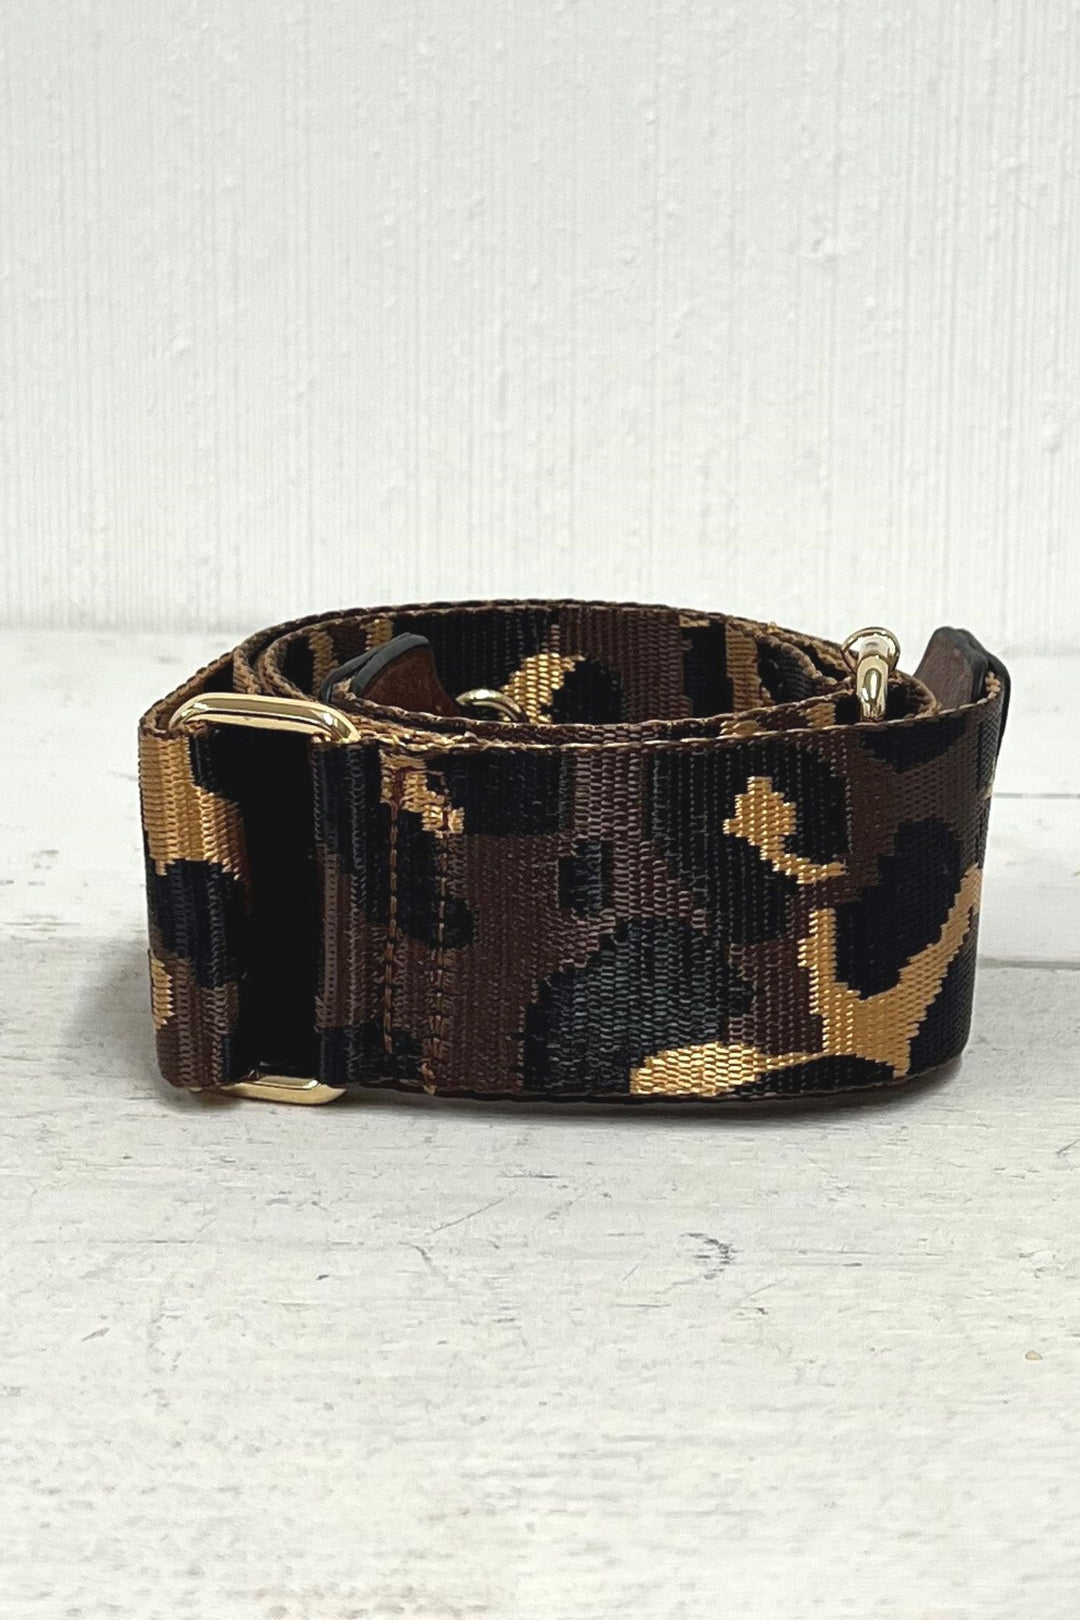 Leopard Print Interchangeable Bag Strap Brown Black Gold - Sugarplum Boutique